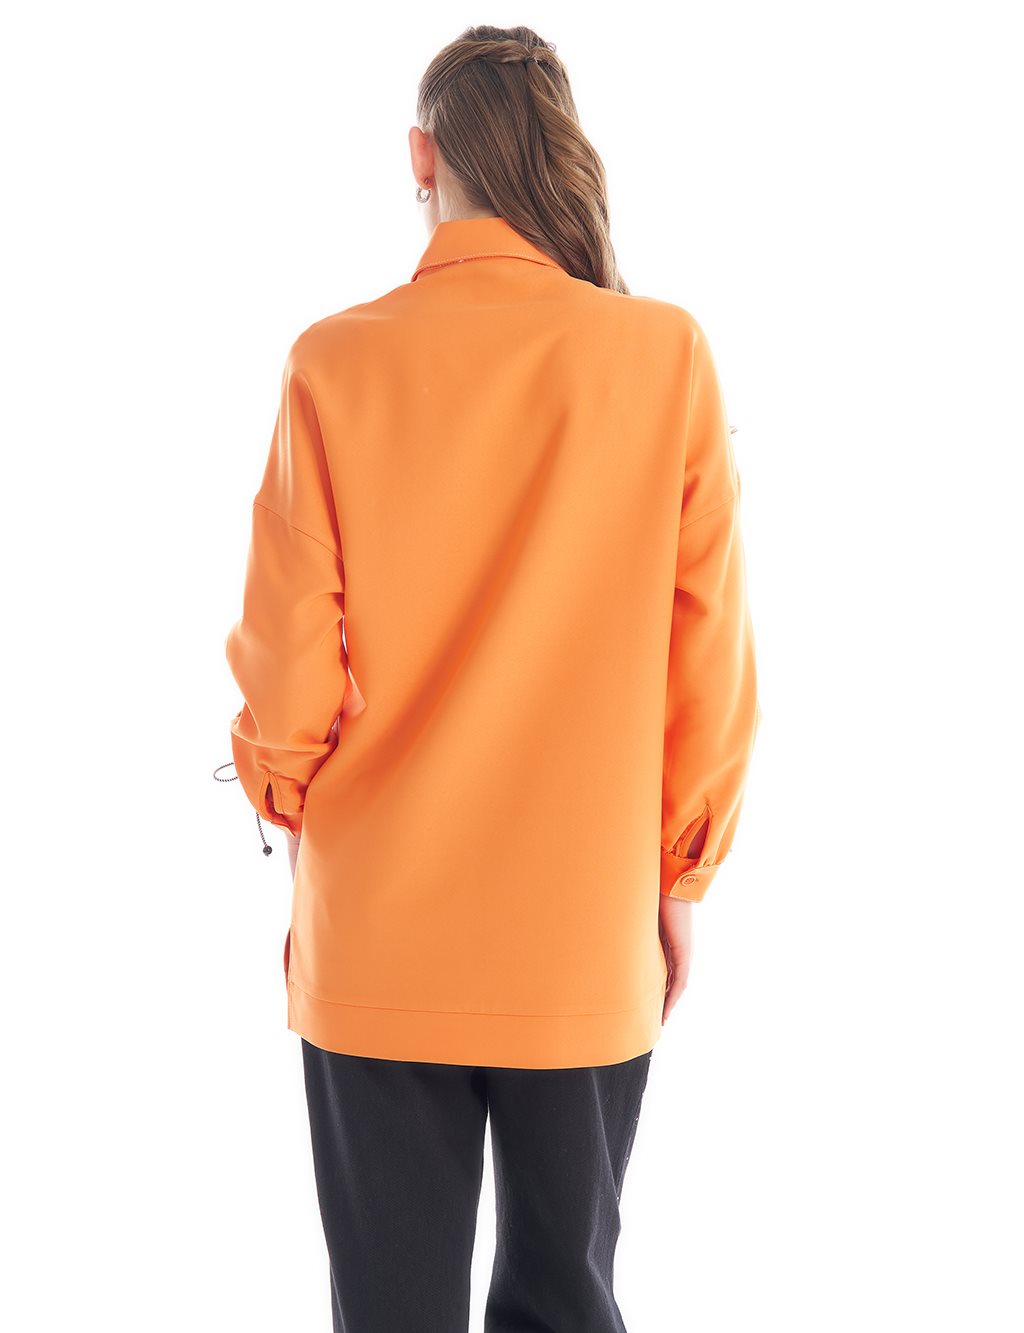 Shirt Collar Tunic with Lacing Detail at Wrists Orange